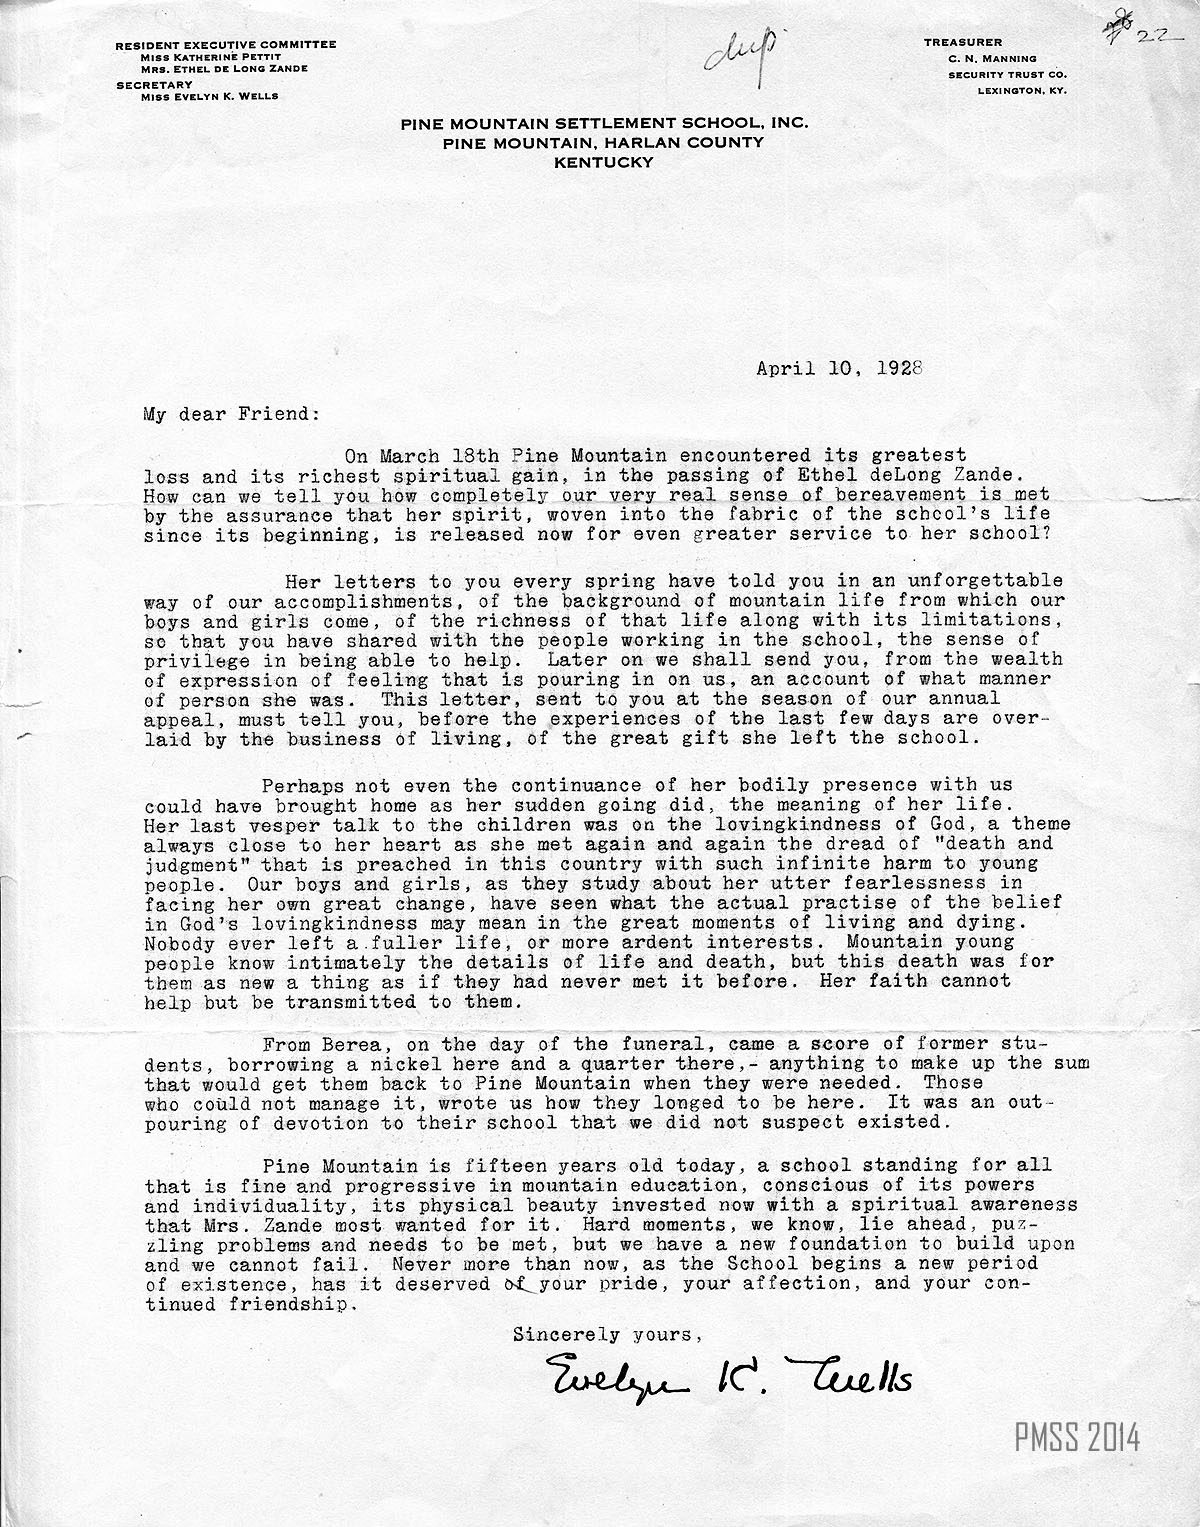 Dear Friend Letters 1928 Pine Mountain Settlement School Collections